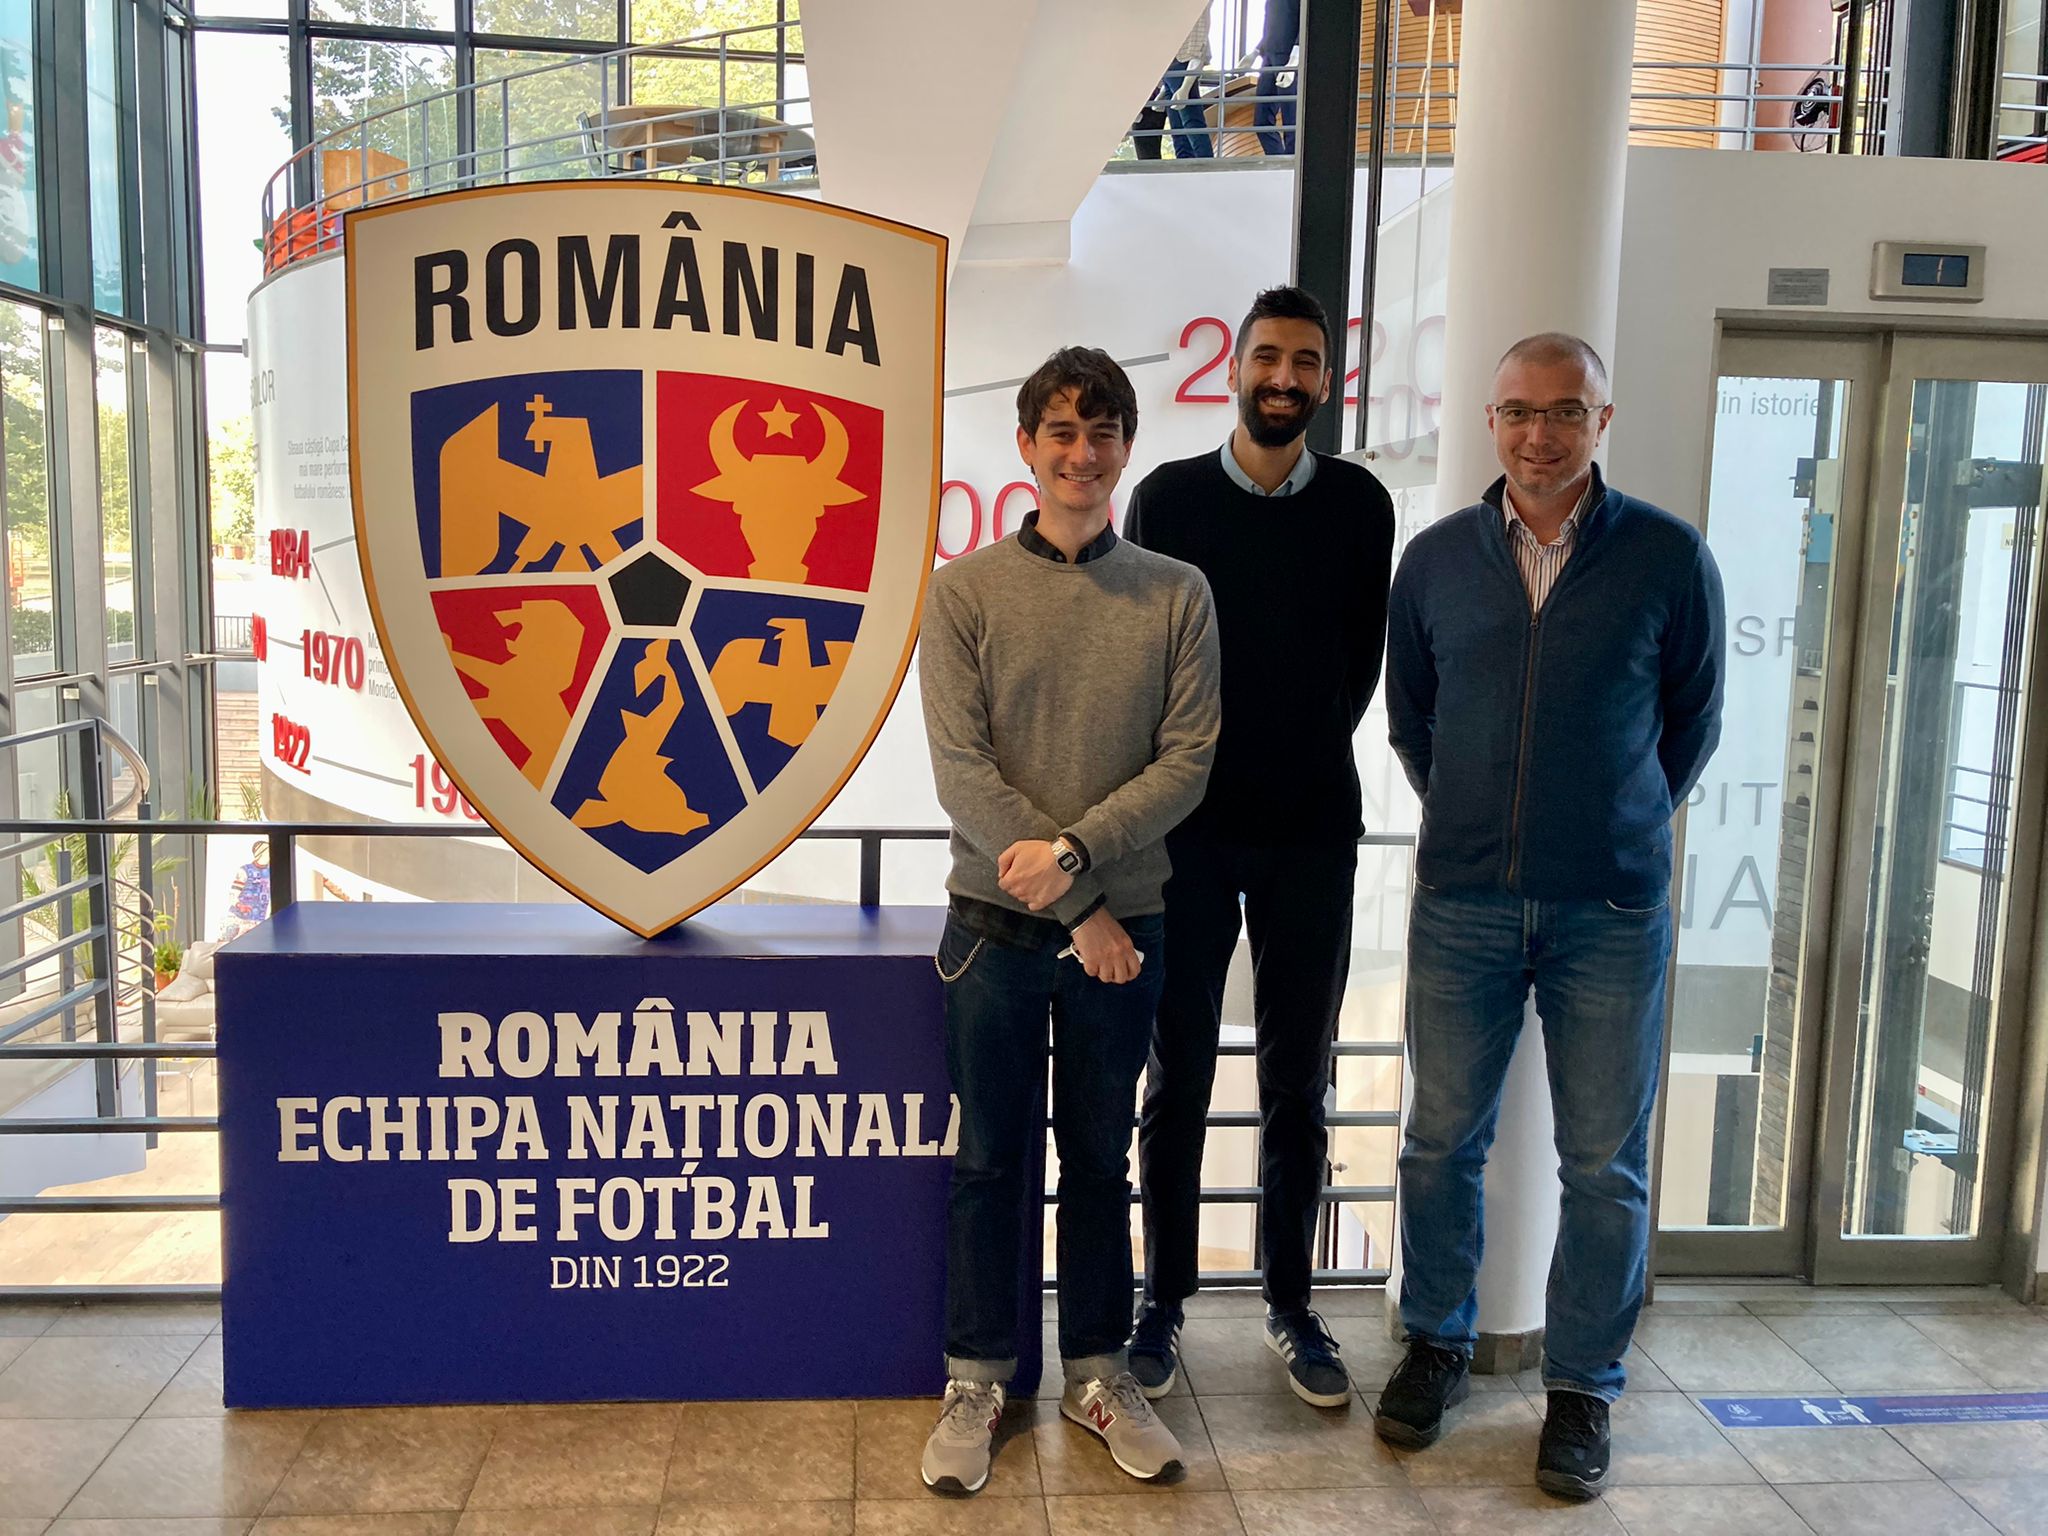 Sant’Anna experts visit Romanian Football Federation and FC Voluntari